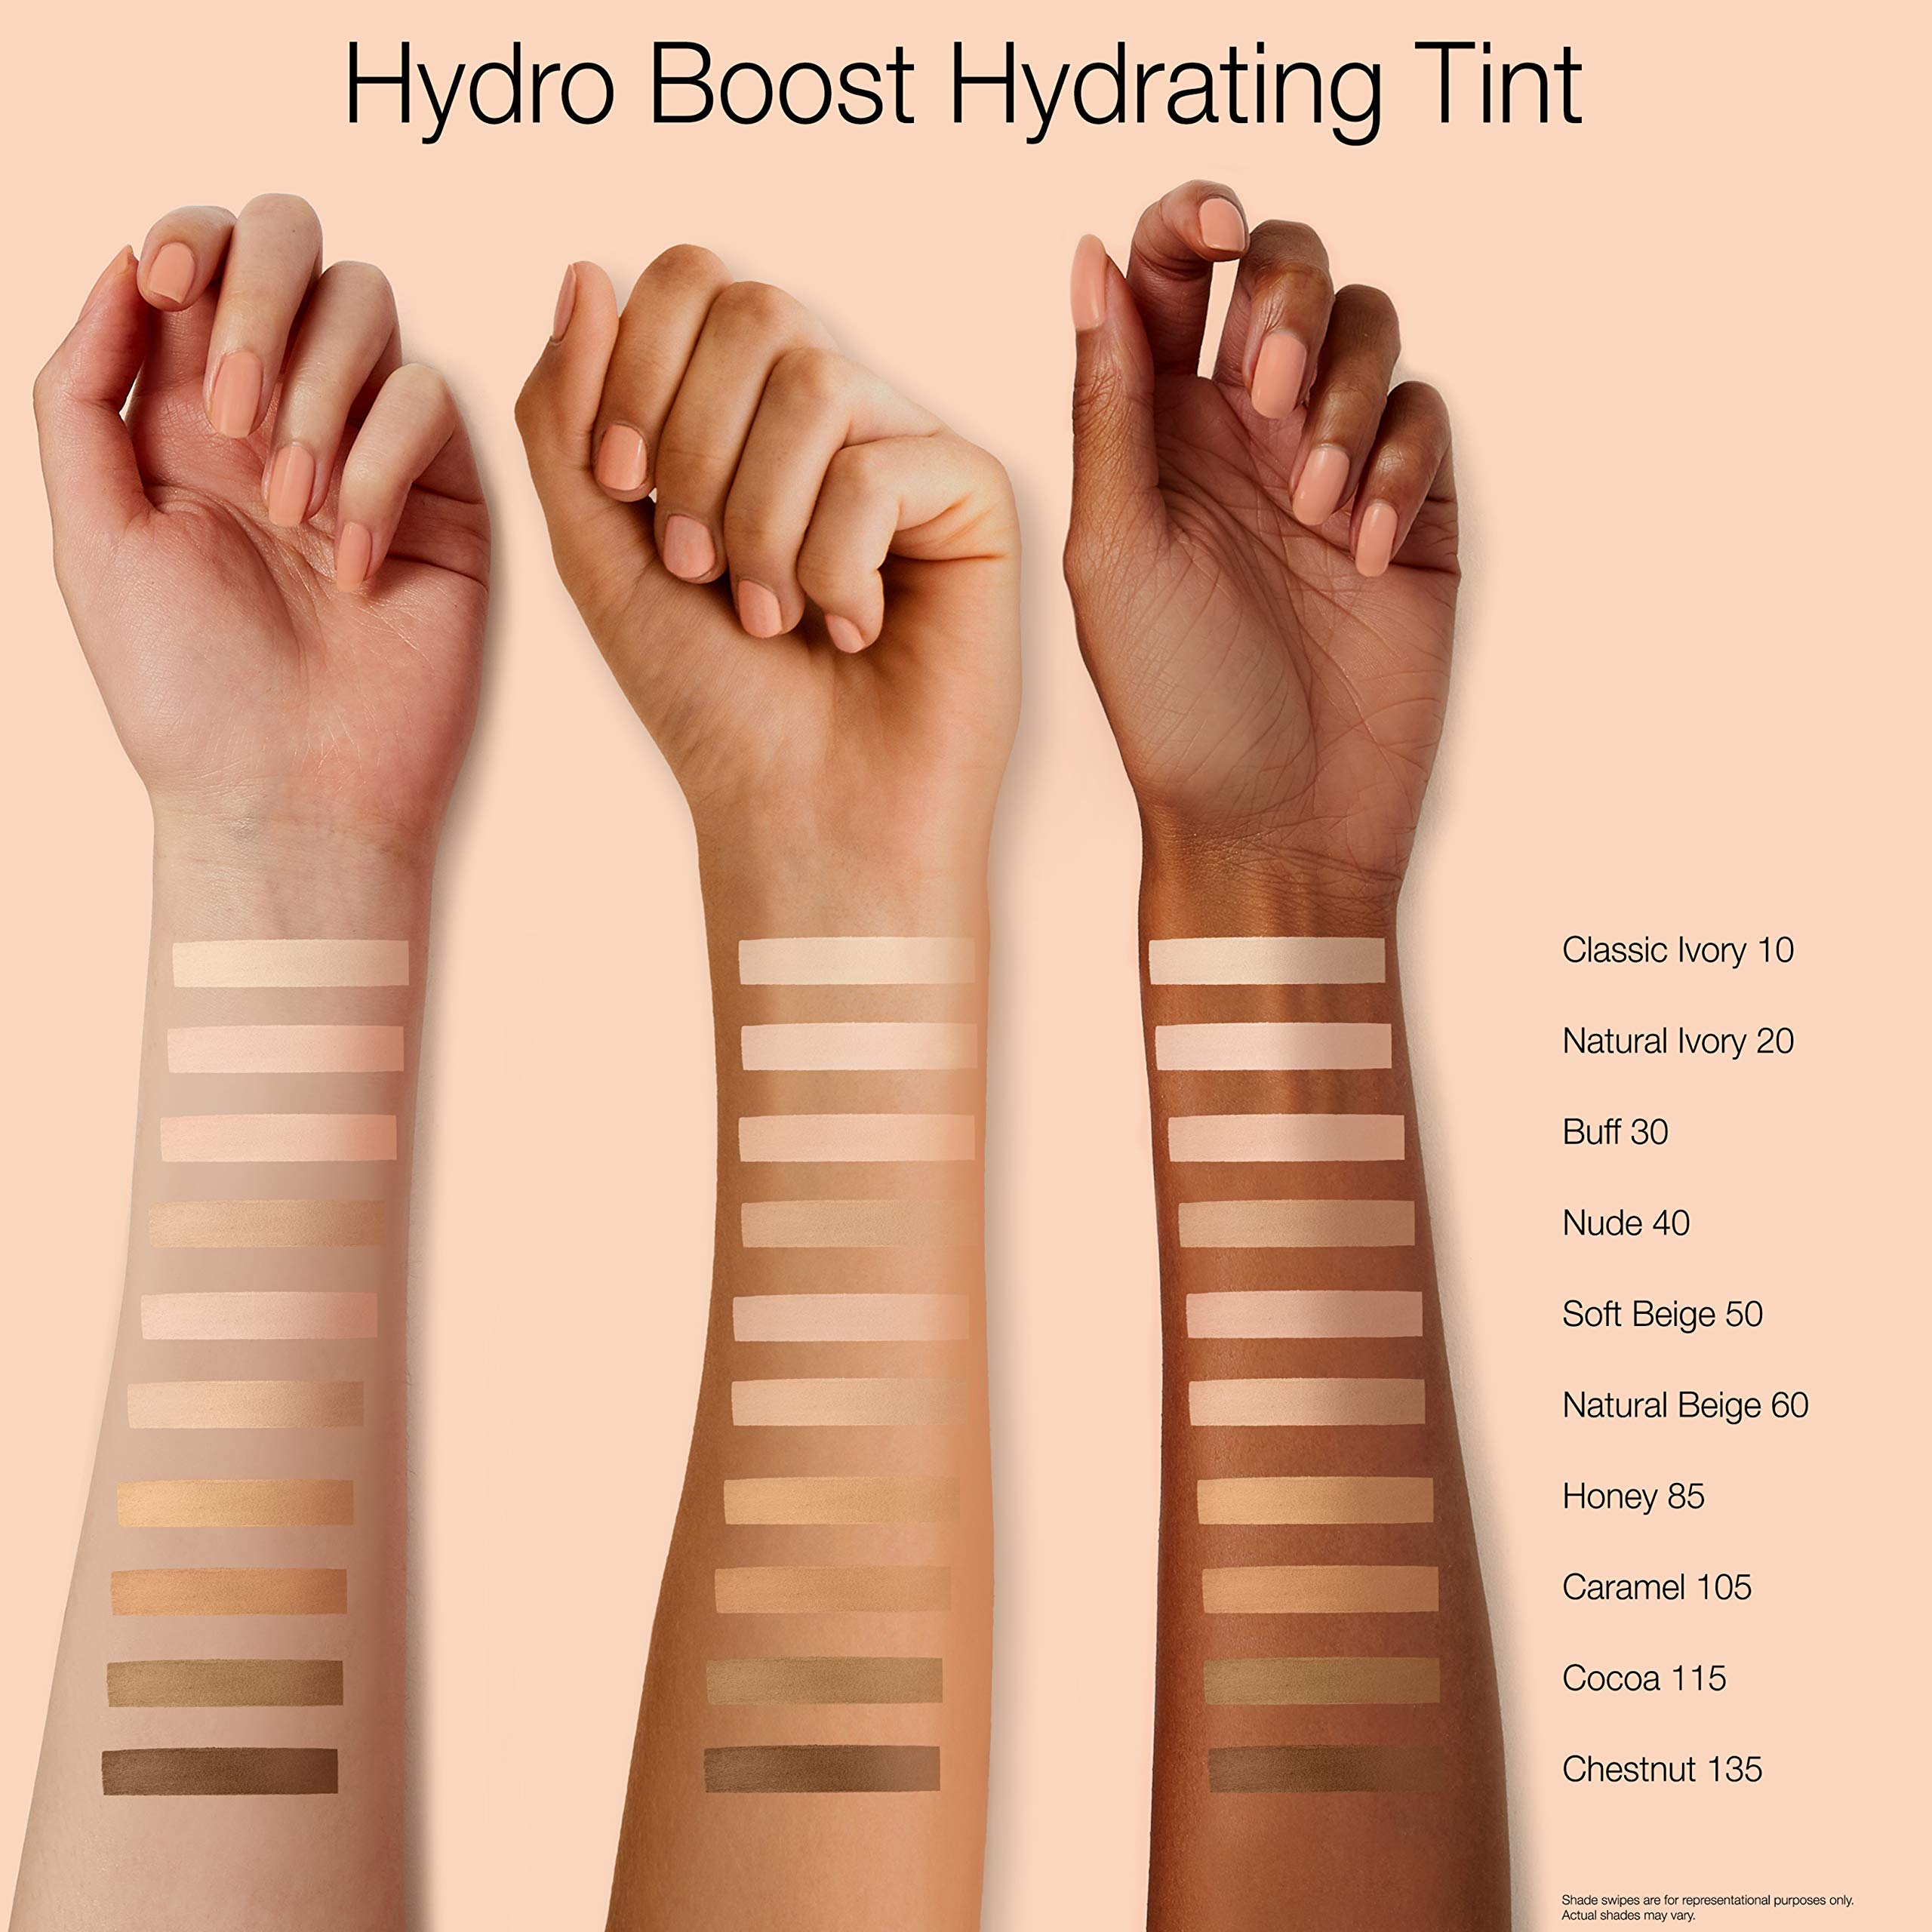 hydro boost hydrating tint